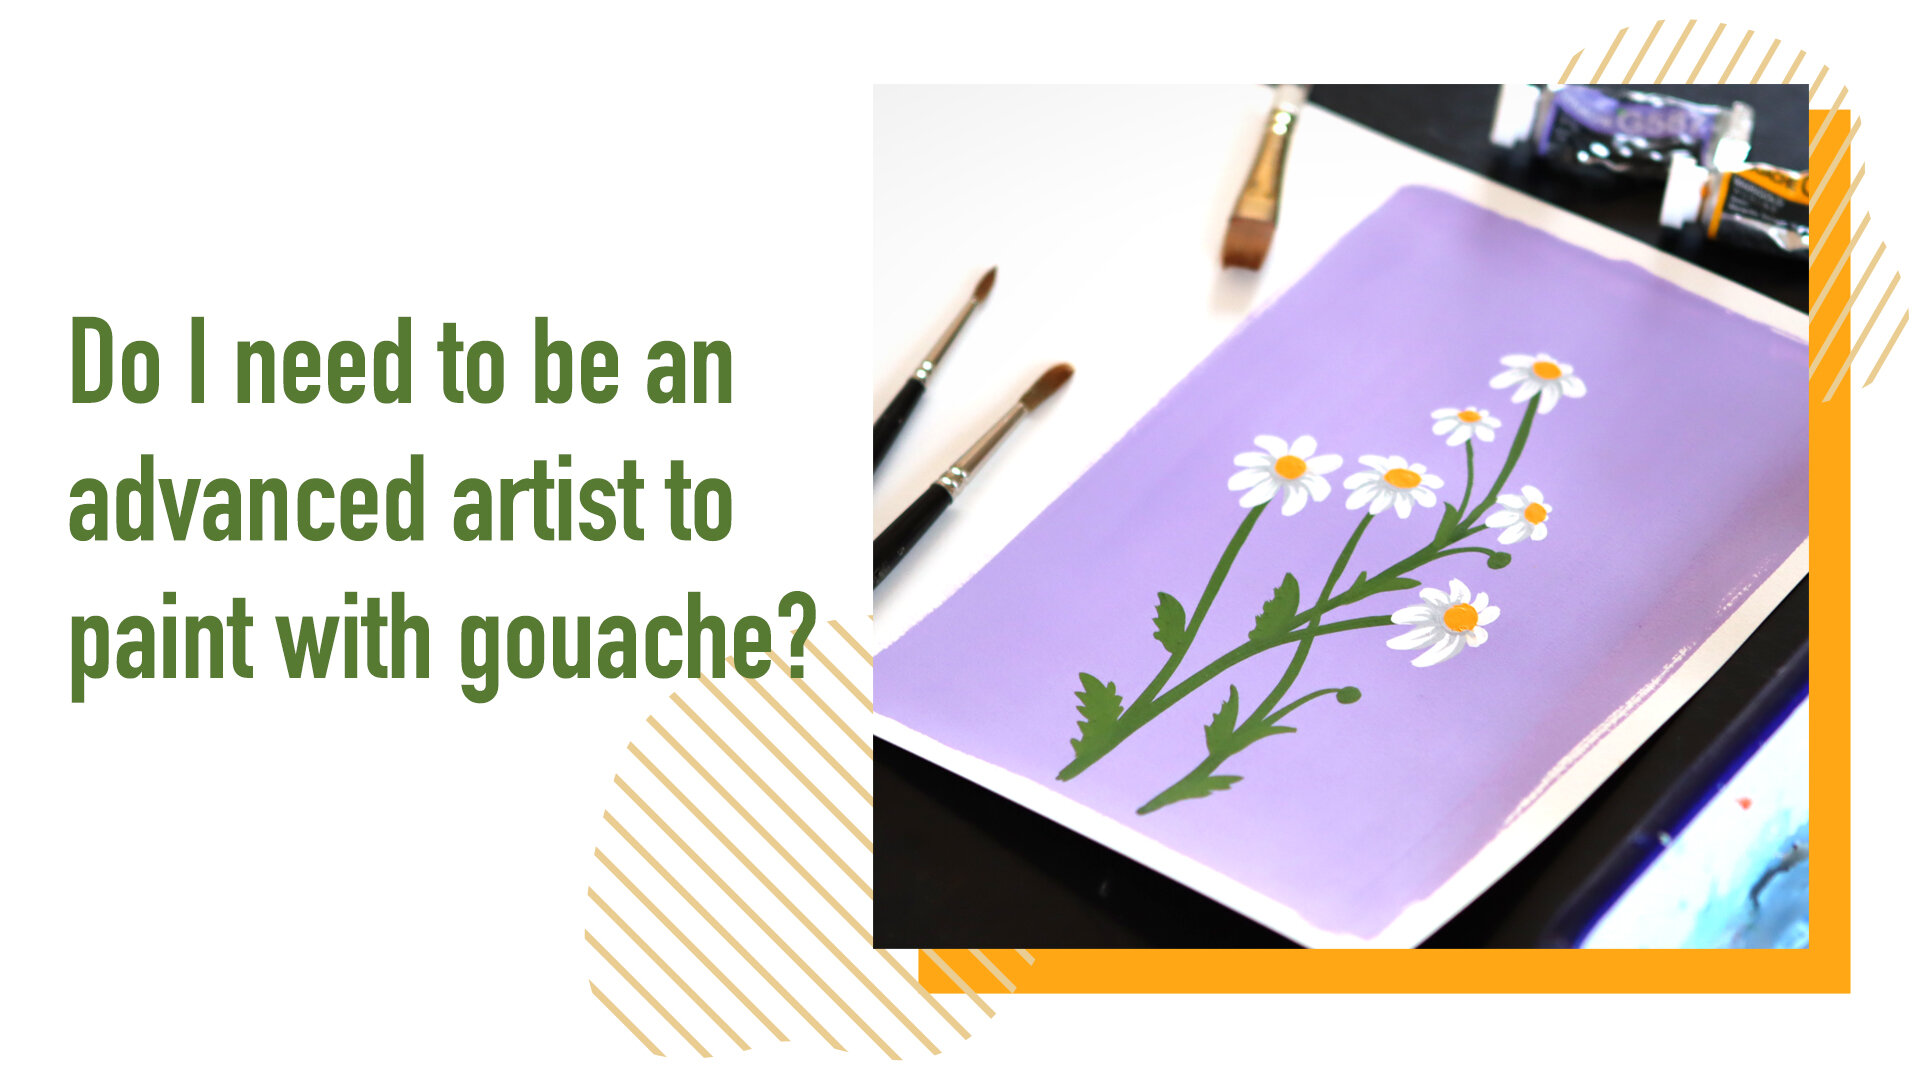 Building my gouache palette for @dispatchfromla's online course